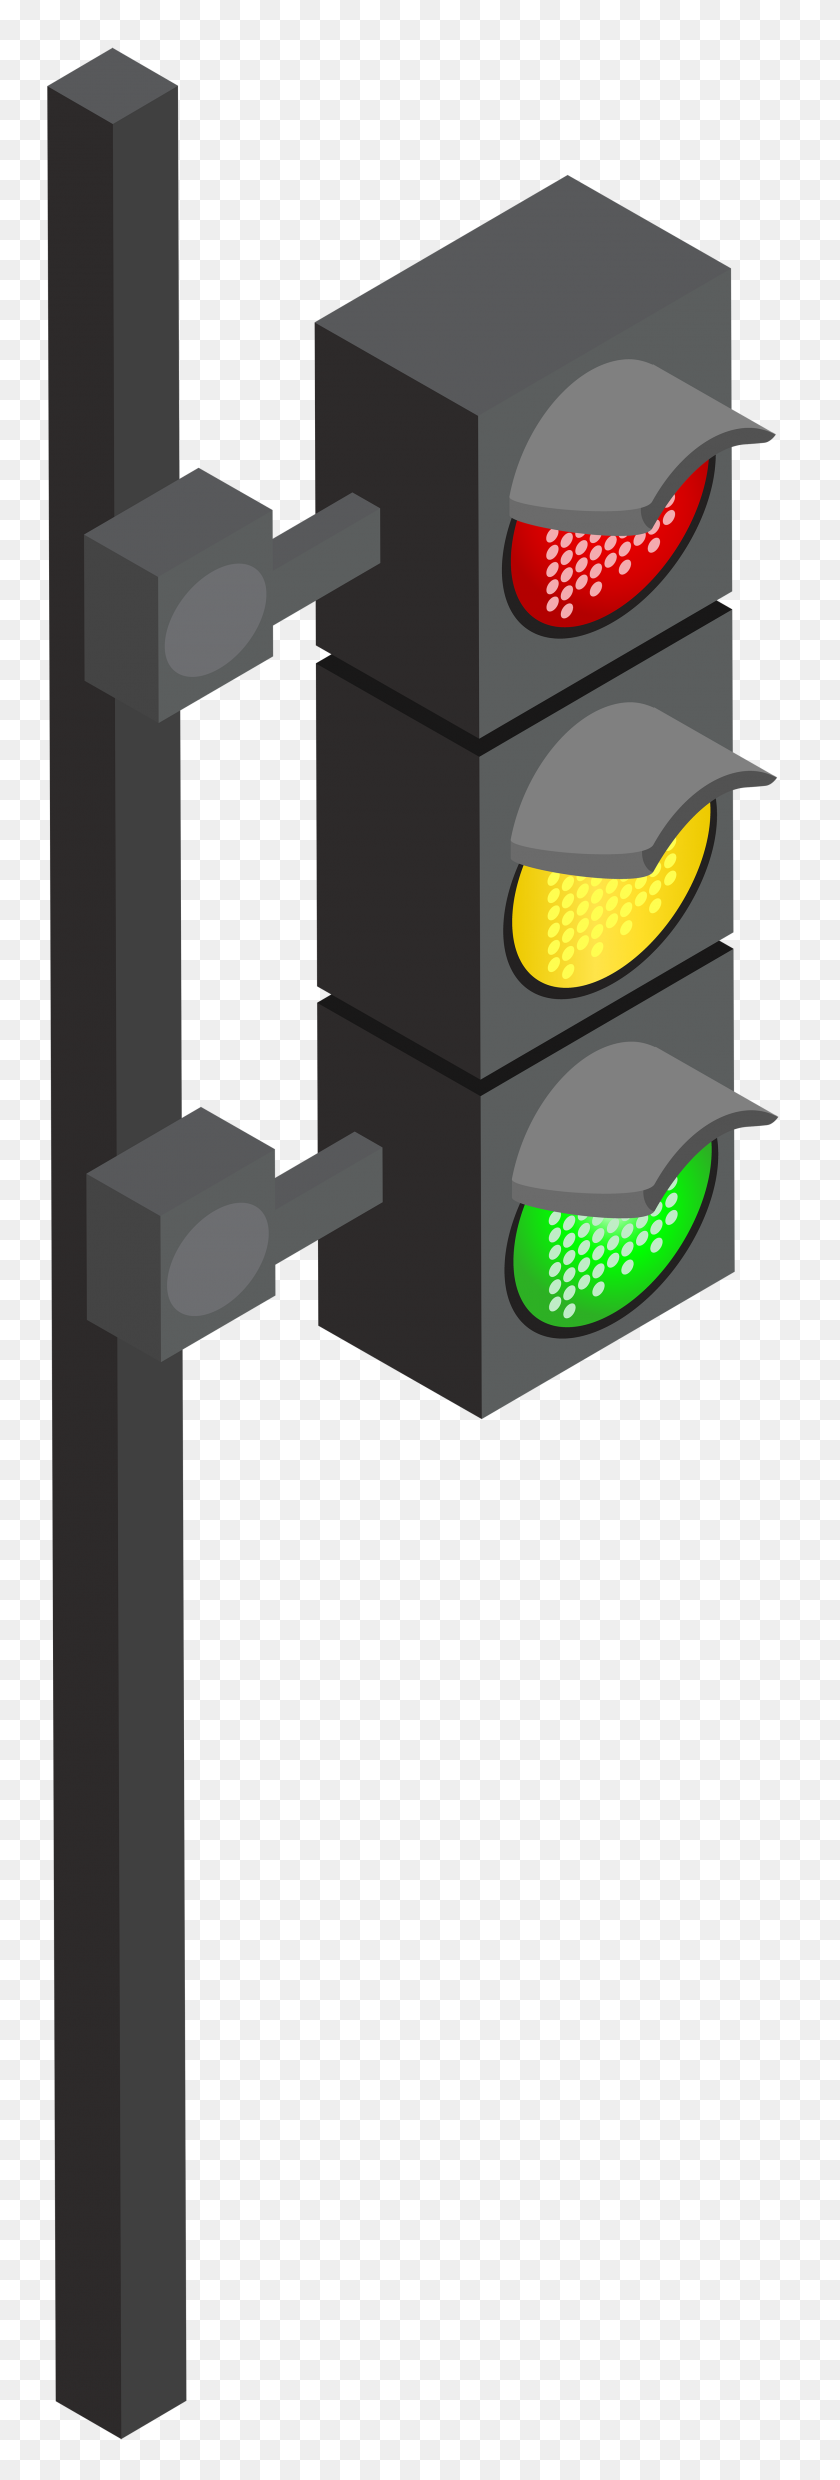 2578x8000 Traffic Light Png Clip Art - Traffic Light Clipart